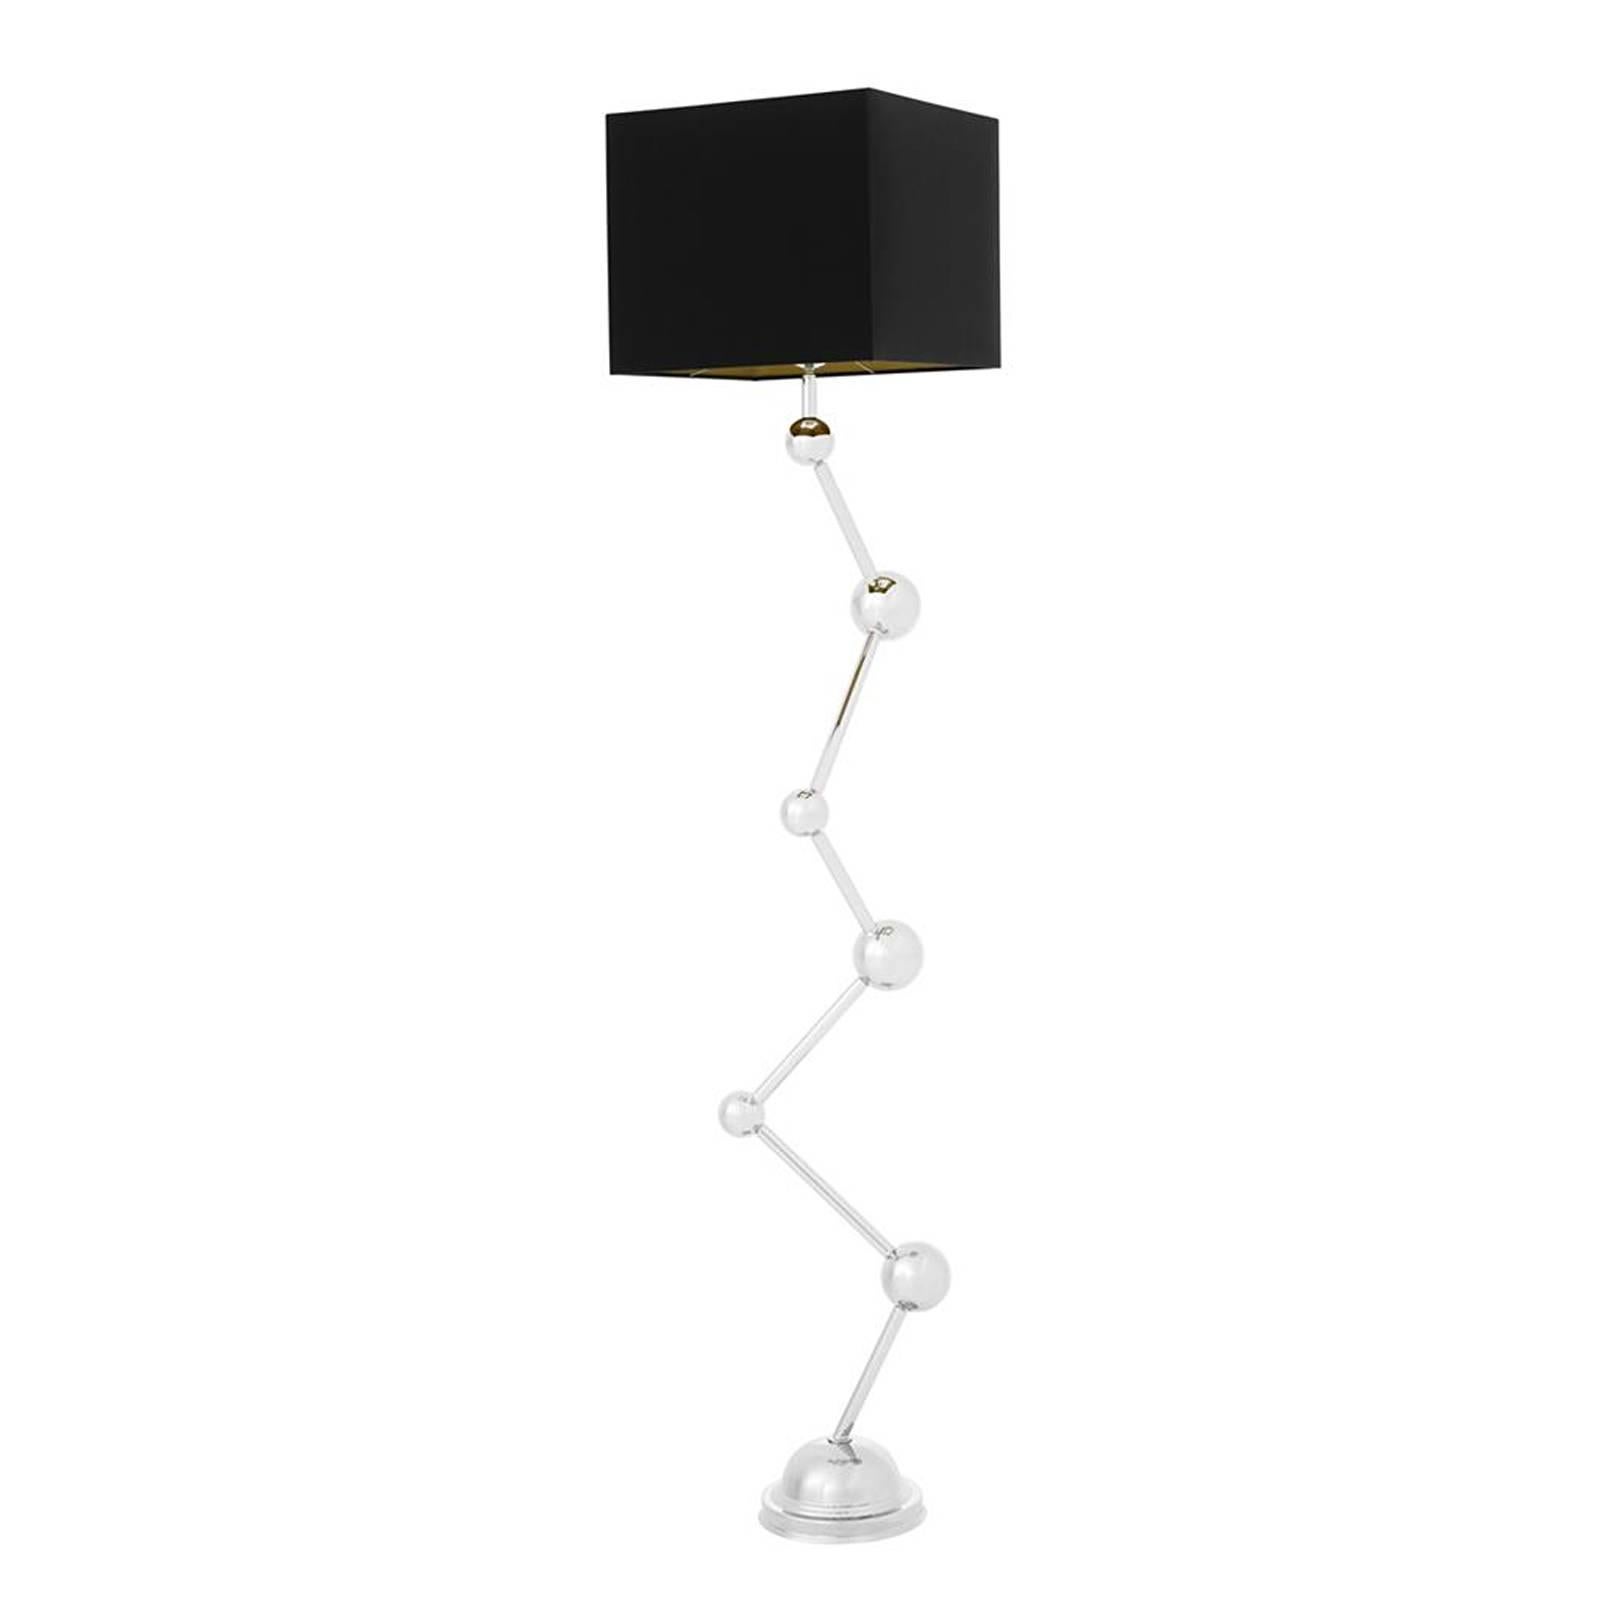 Floor lamp Astro in nickel finish
with black lampshade. One bulb lamp
holder type E27, maximum 40 Watt.
